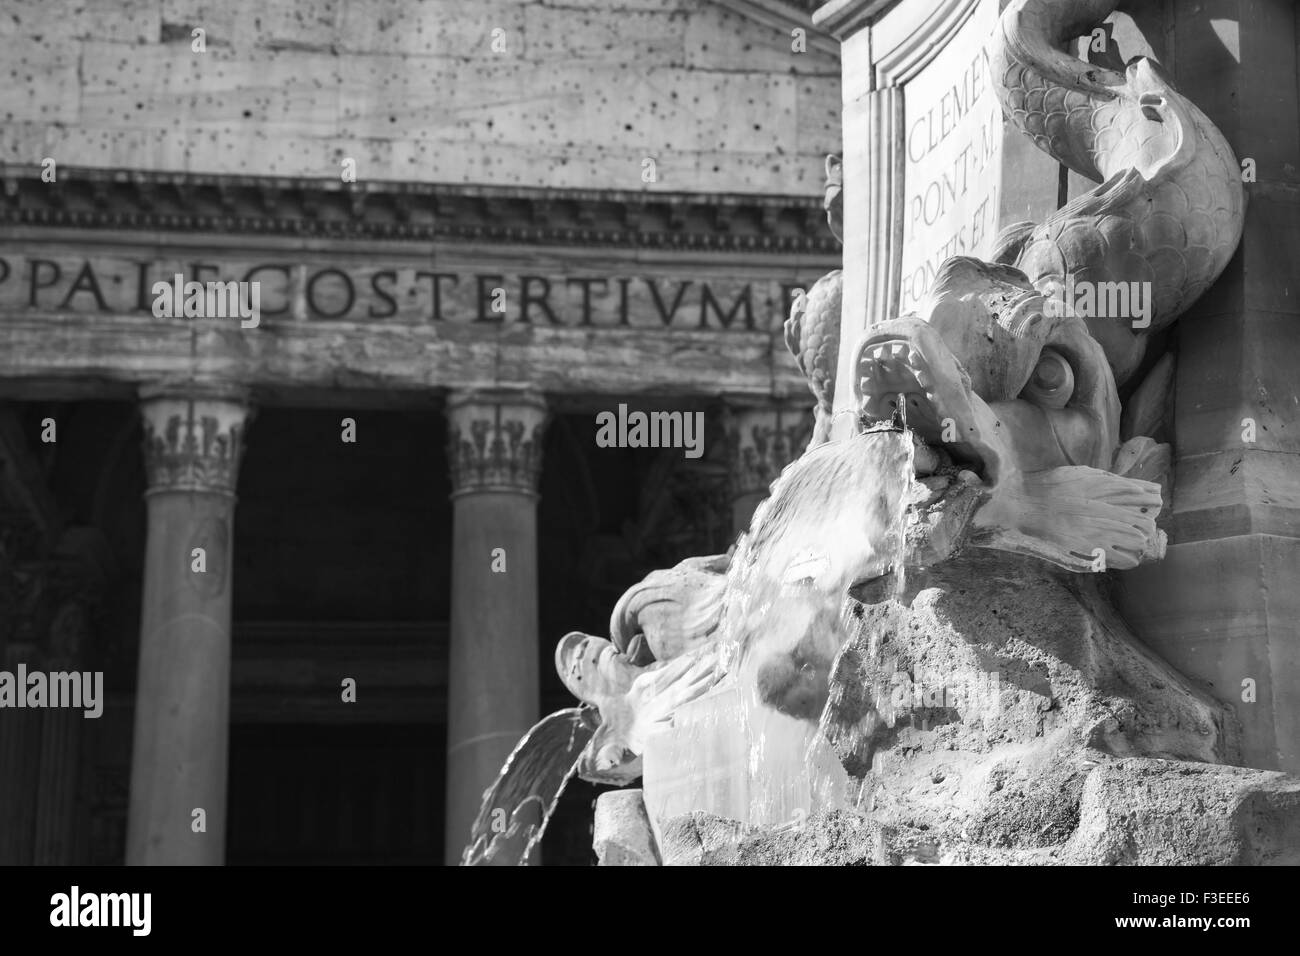 Fragment des Brunnens mit Delfinen Skulpturen. Italien, Rom. Piazza della Rotonda. Fontana del Pantheon Stockfoto